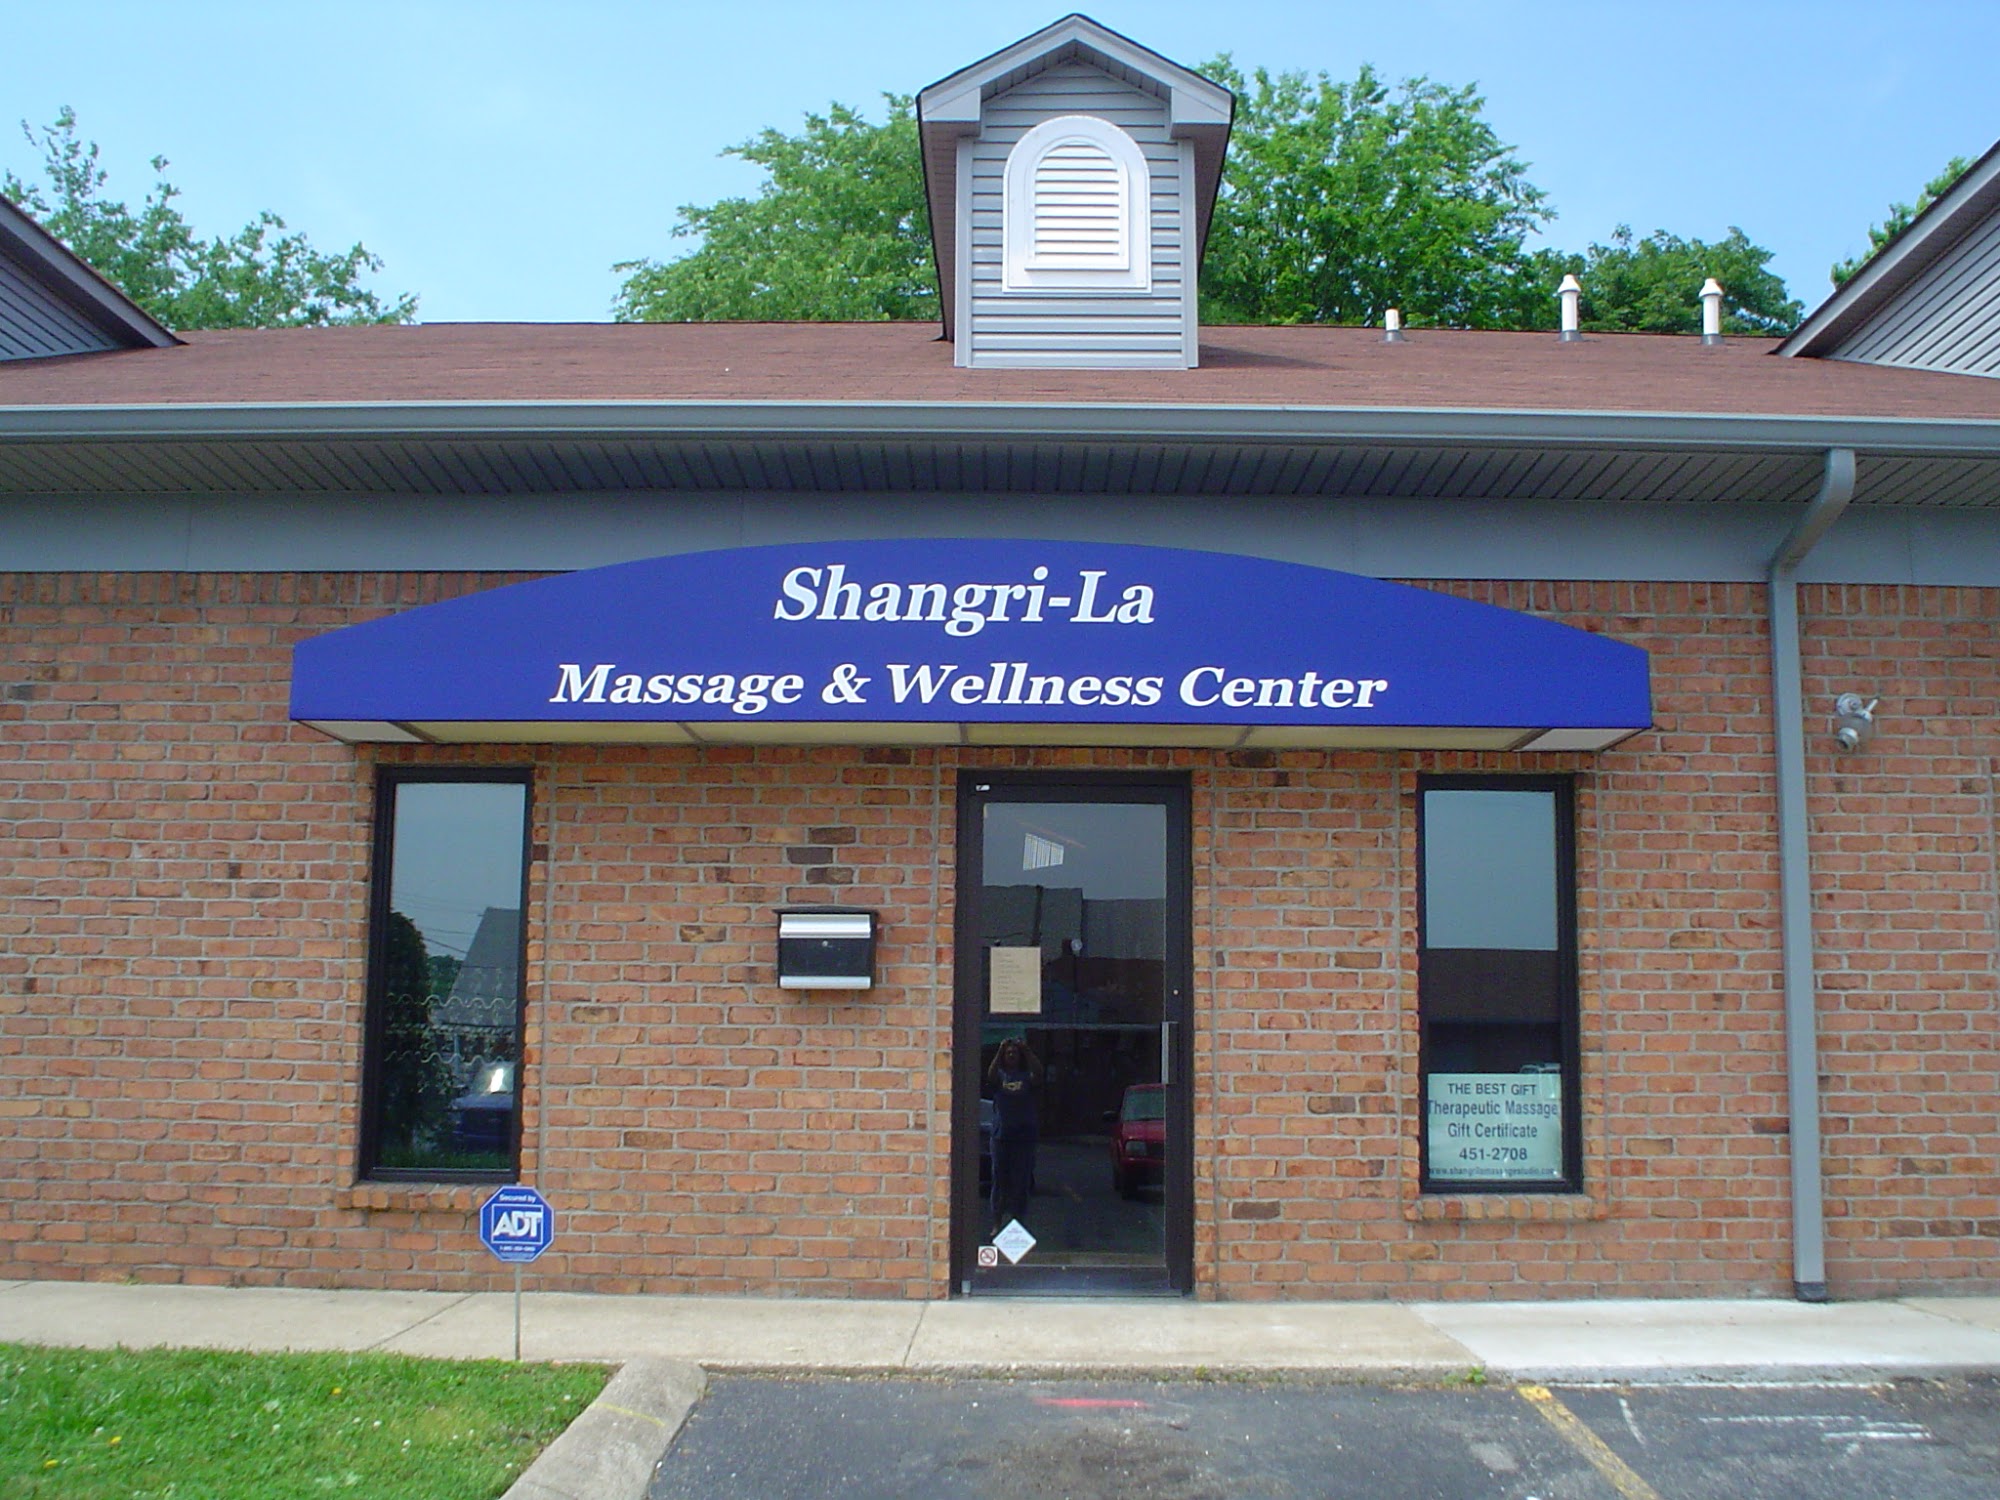 Shangri-La Massage & Wellness Center